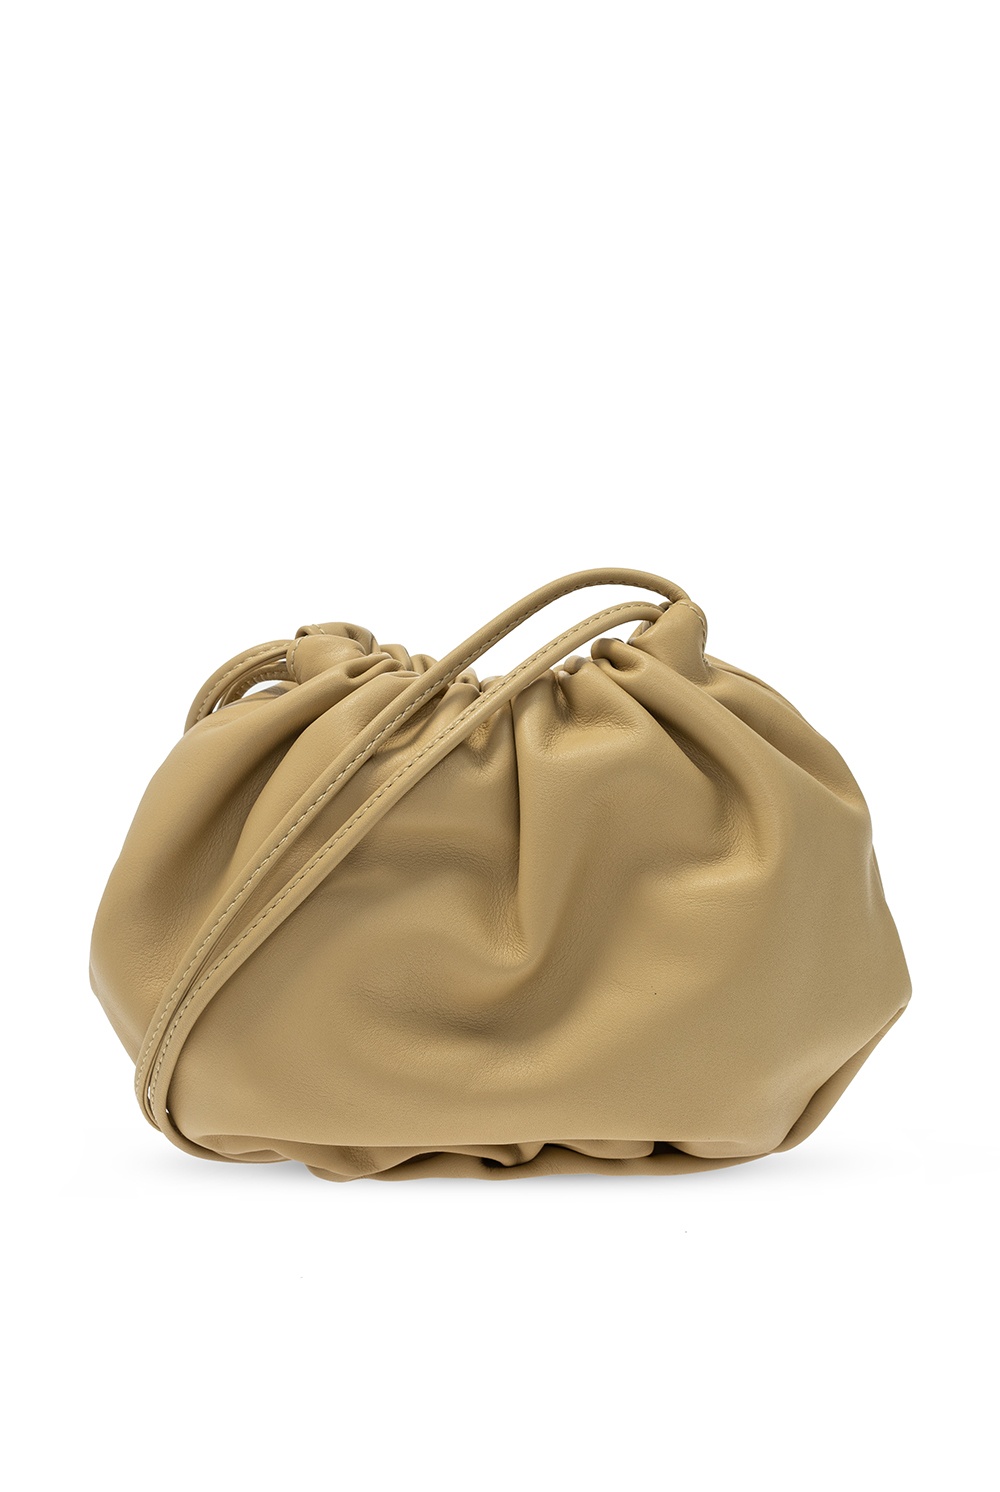 ‘The Mini Bulb’ shoulder bag Bottega Veneta - Vitkac Sweden